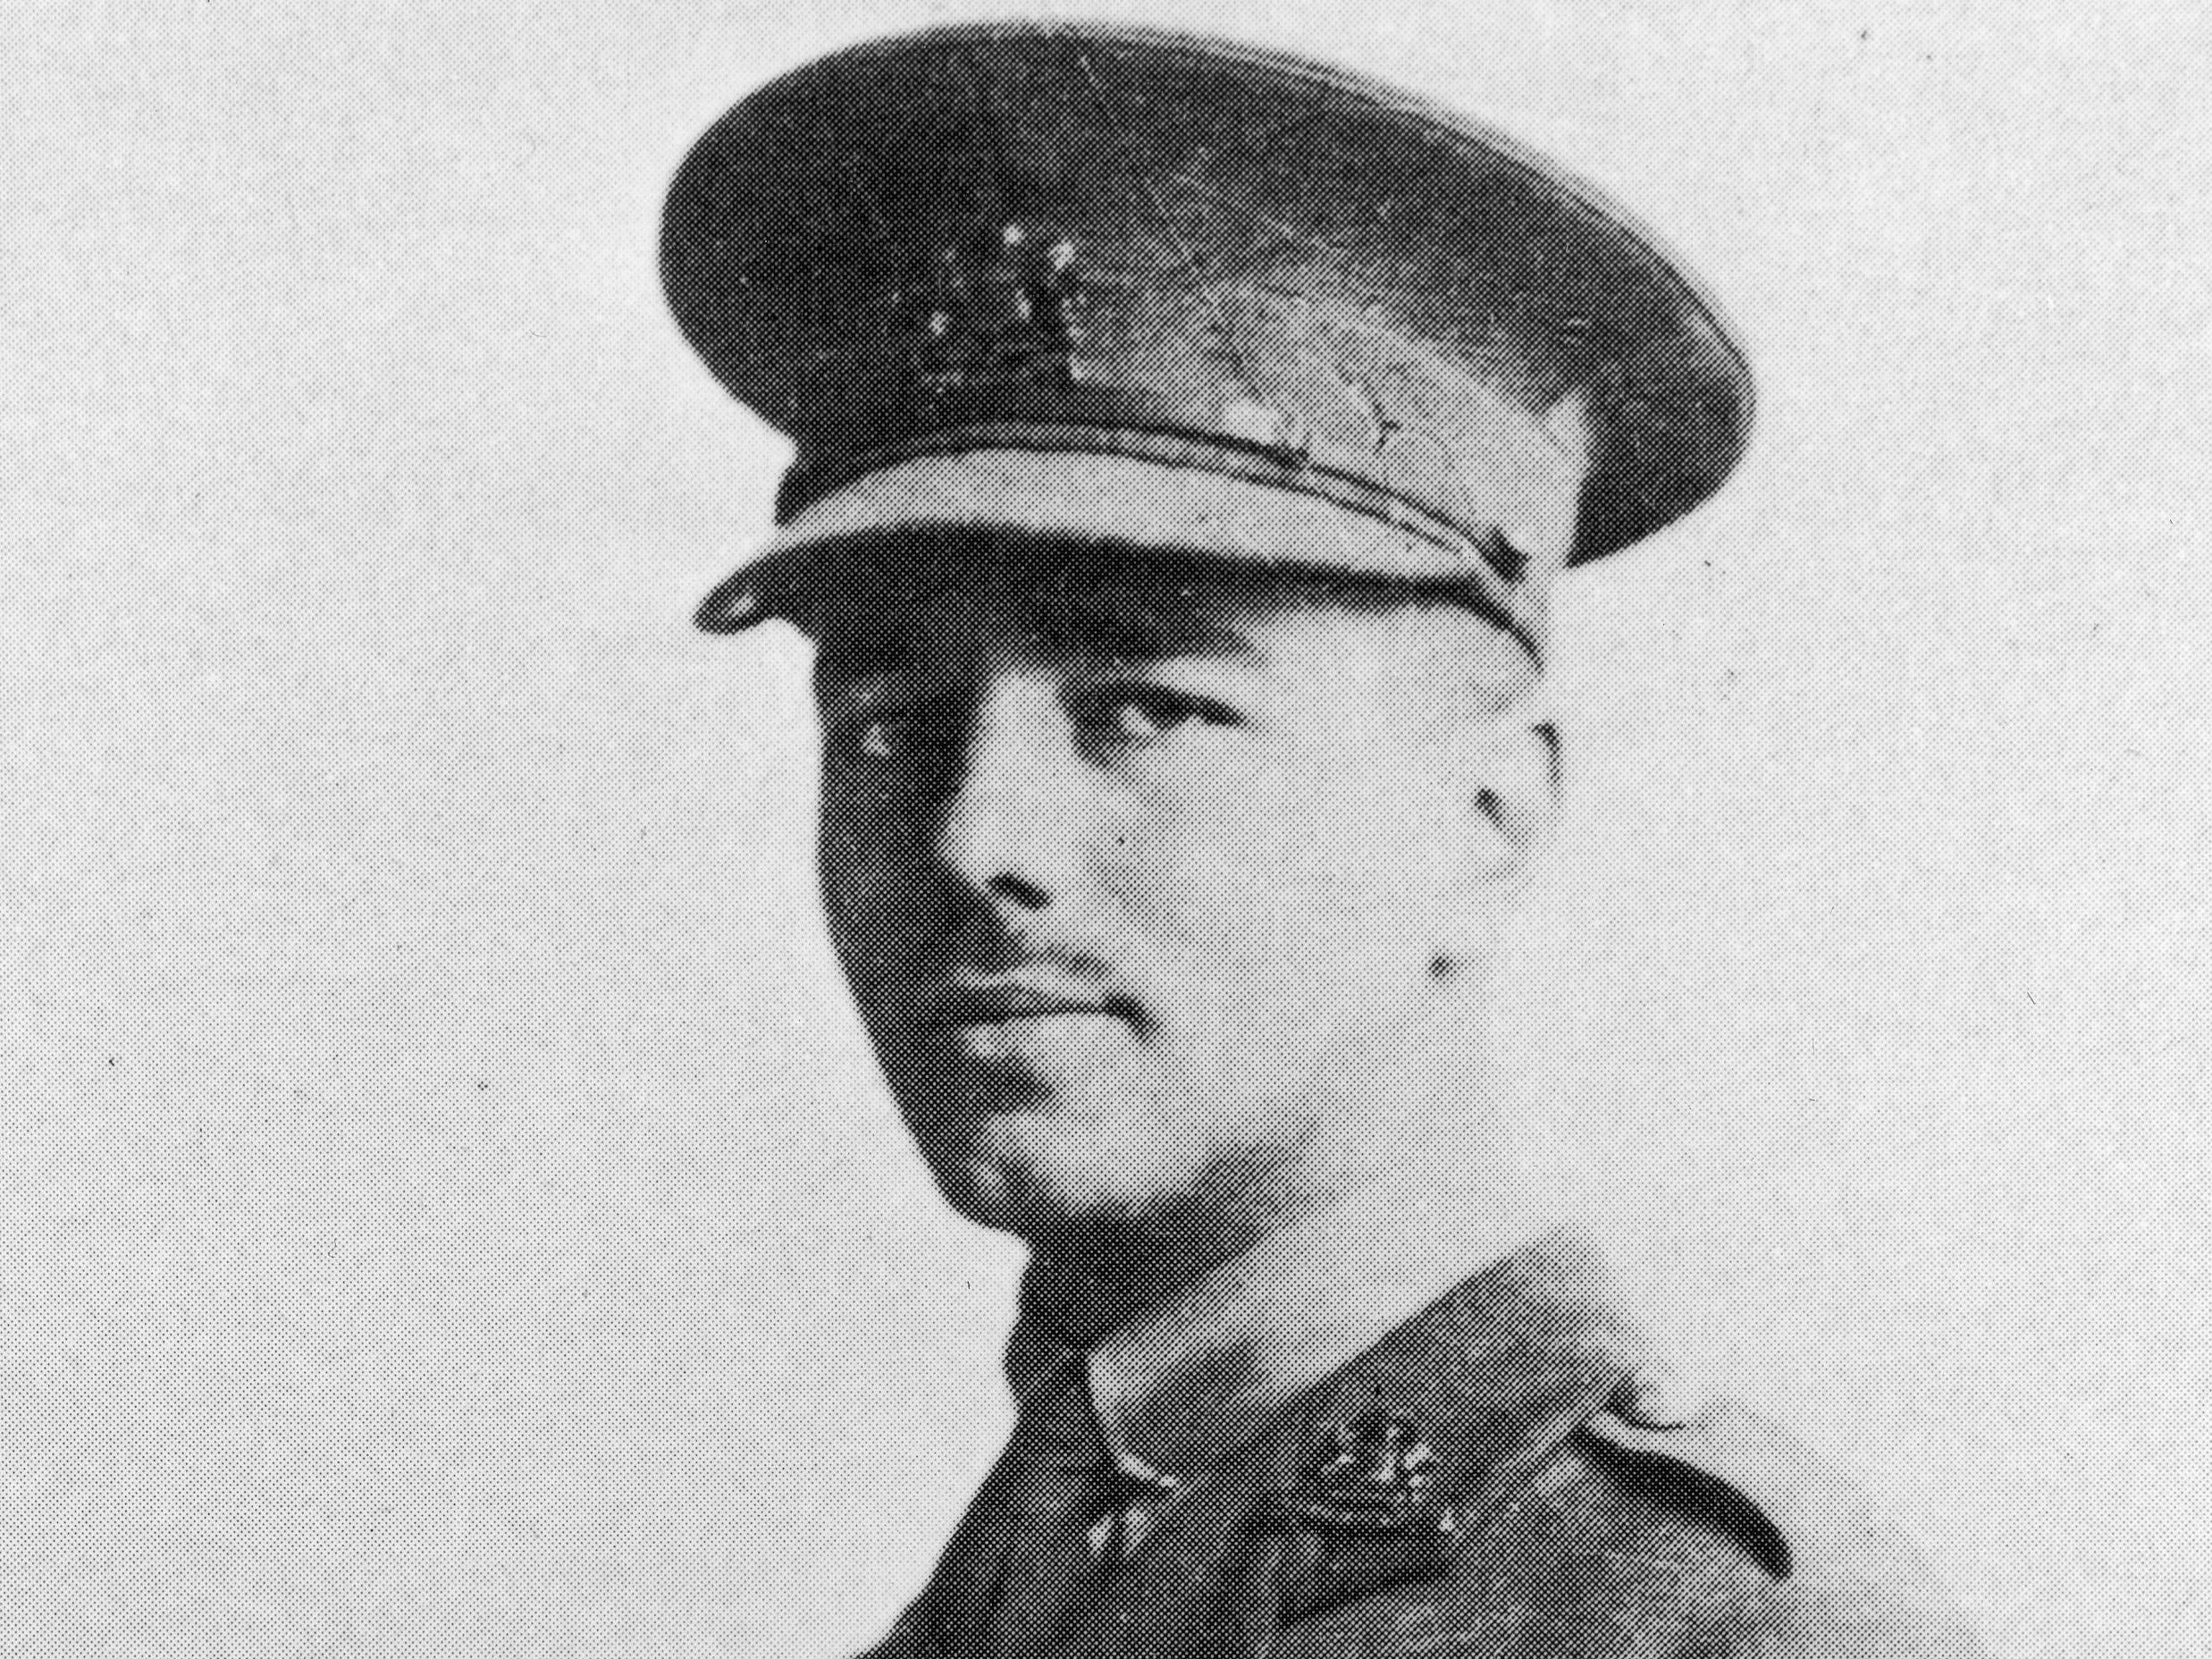 Wilfred Owen in uniform as a Second Lieutenant